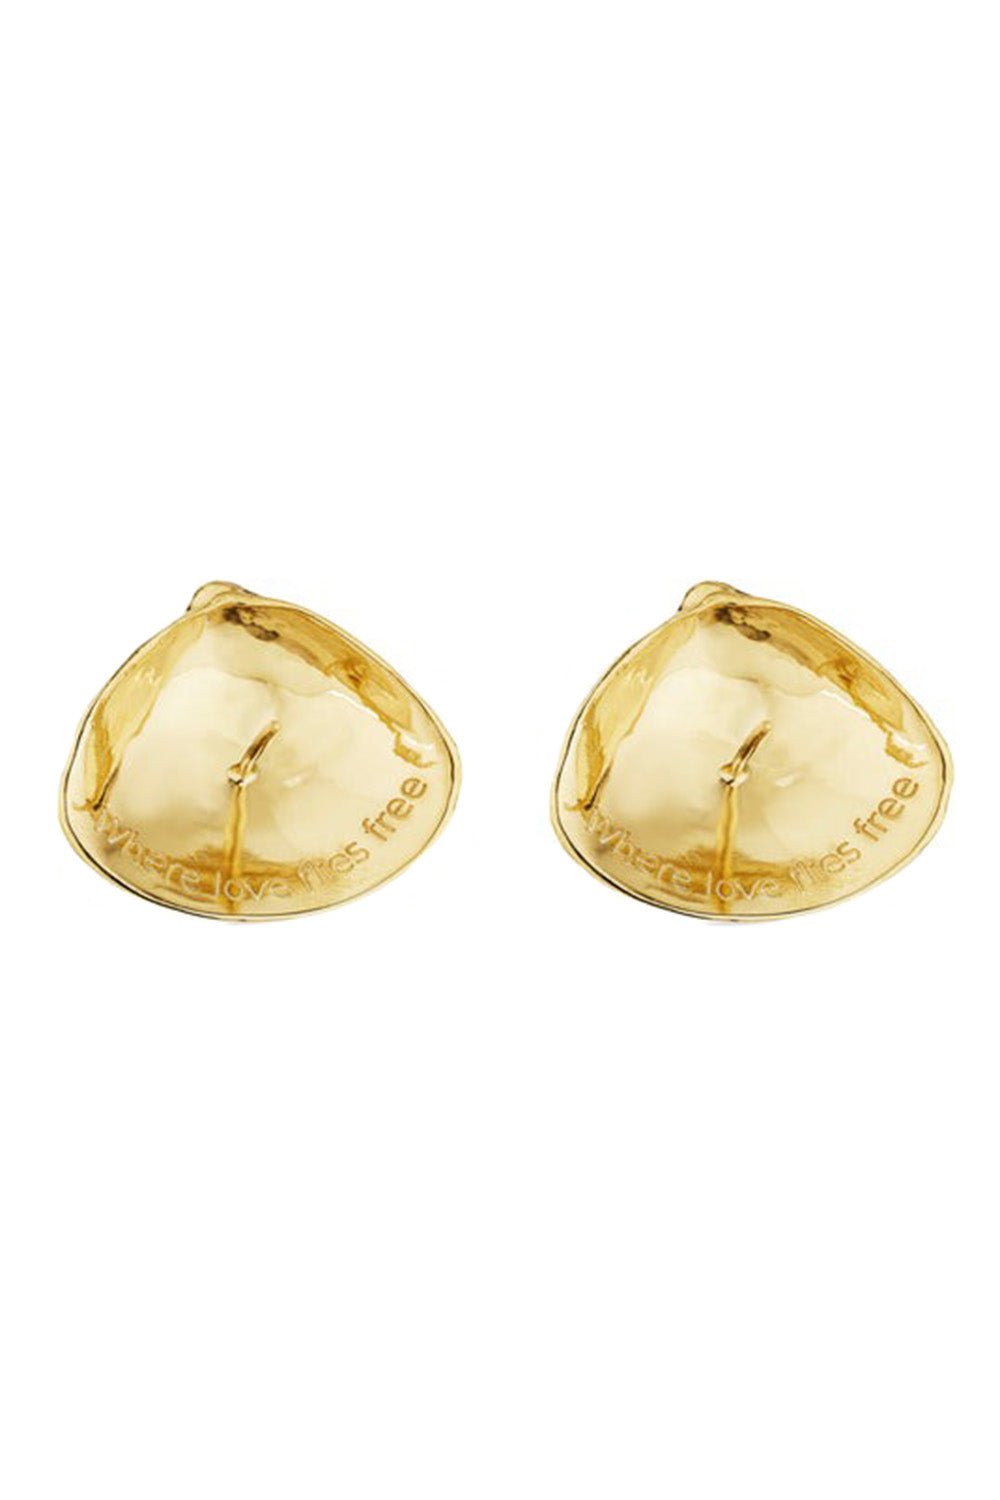 CADAR-70's Shell Earrings-YELLOW GOLD